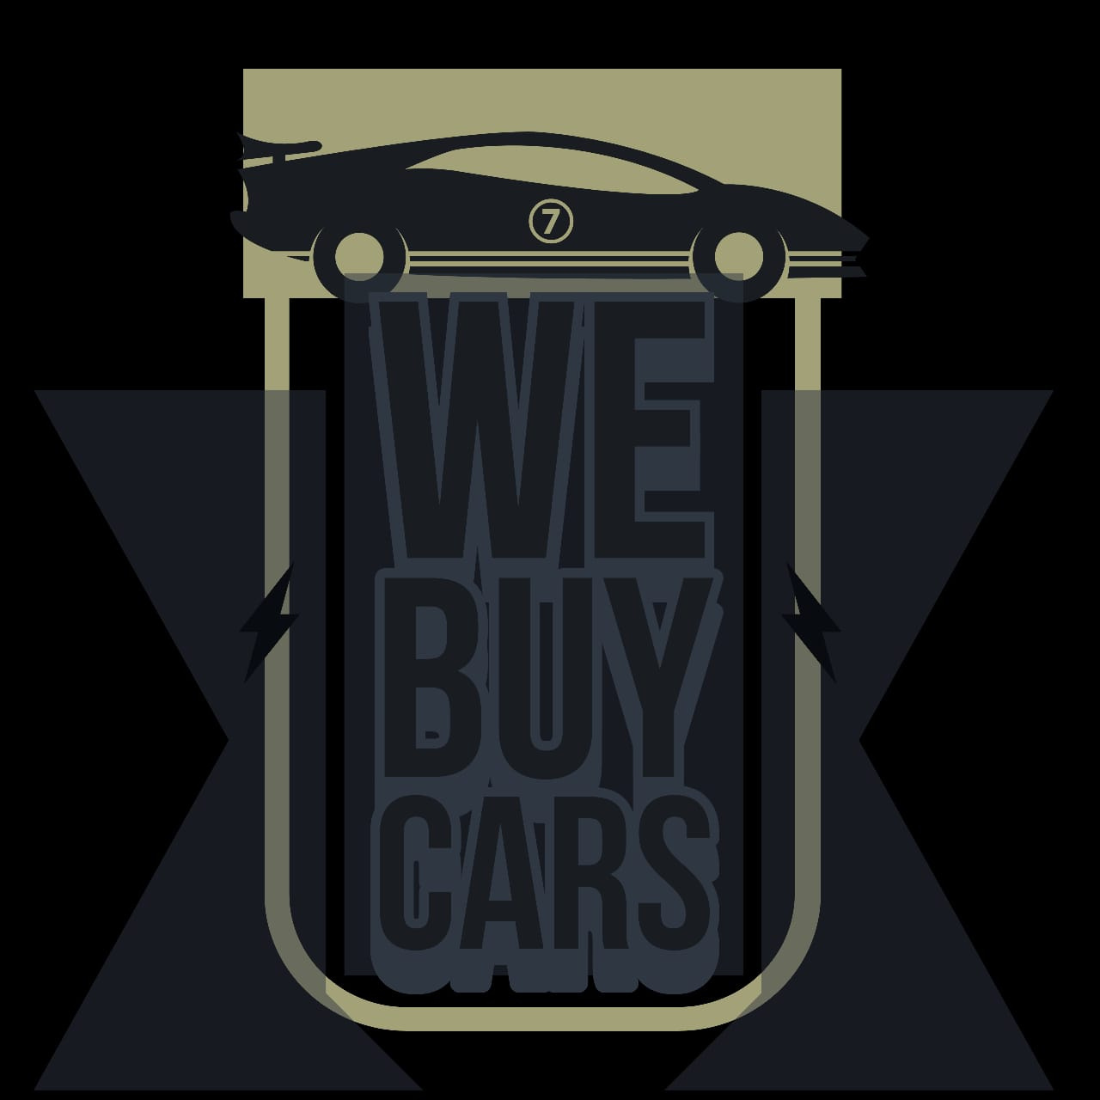 We Buy Cars Business Logos in dark color.